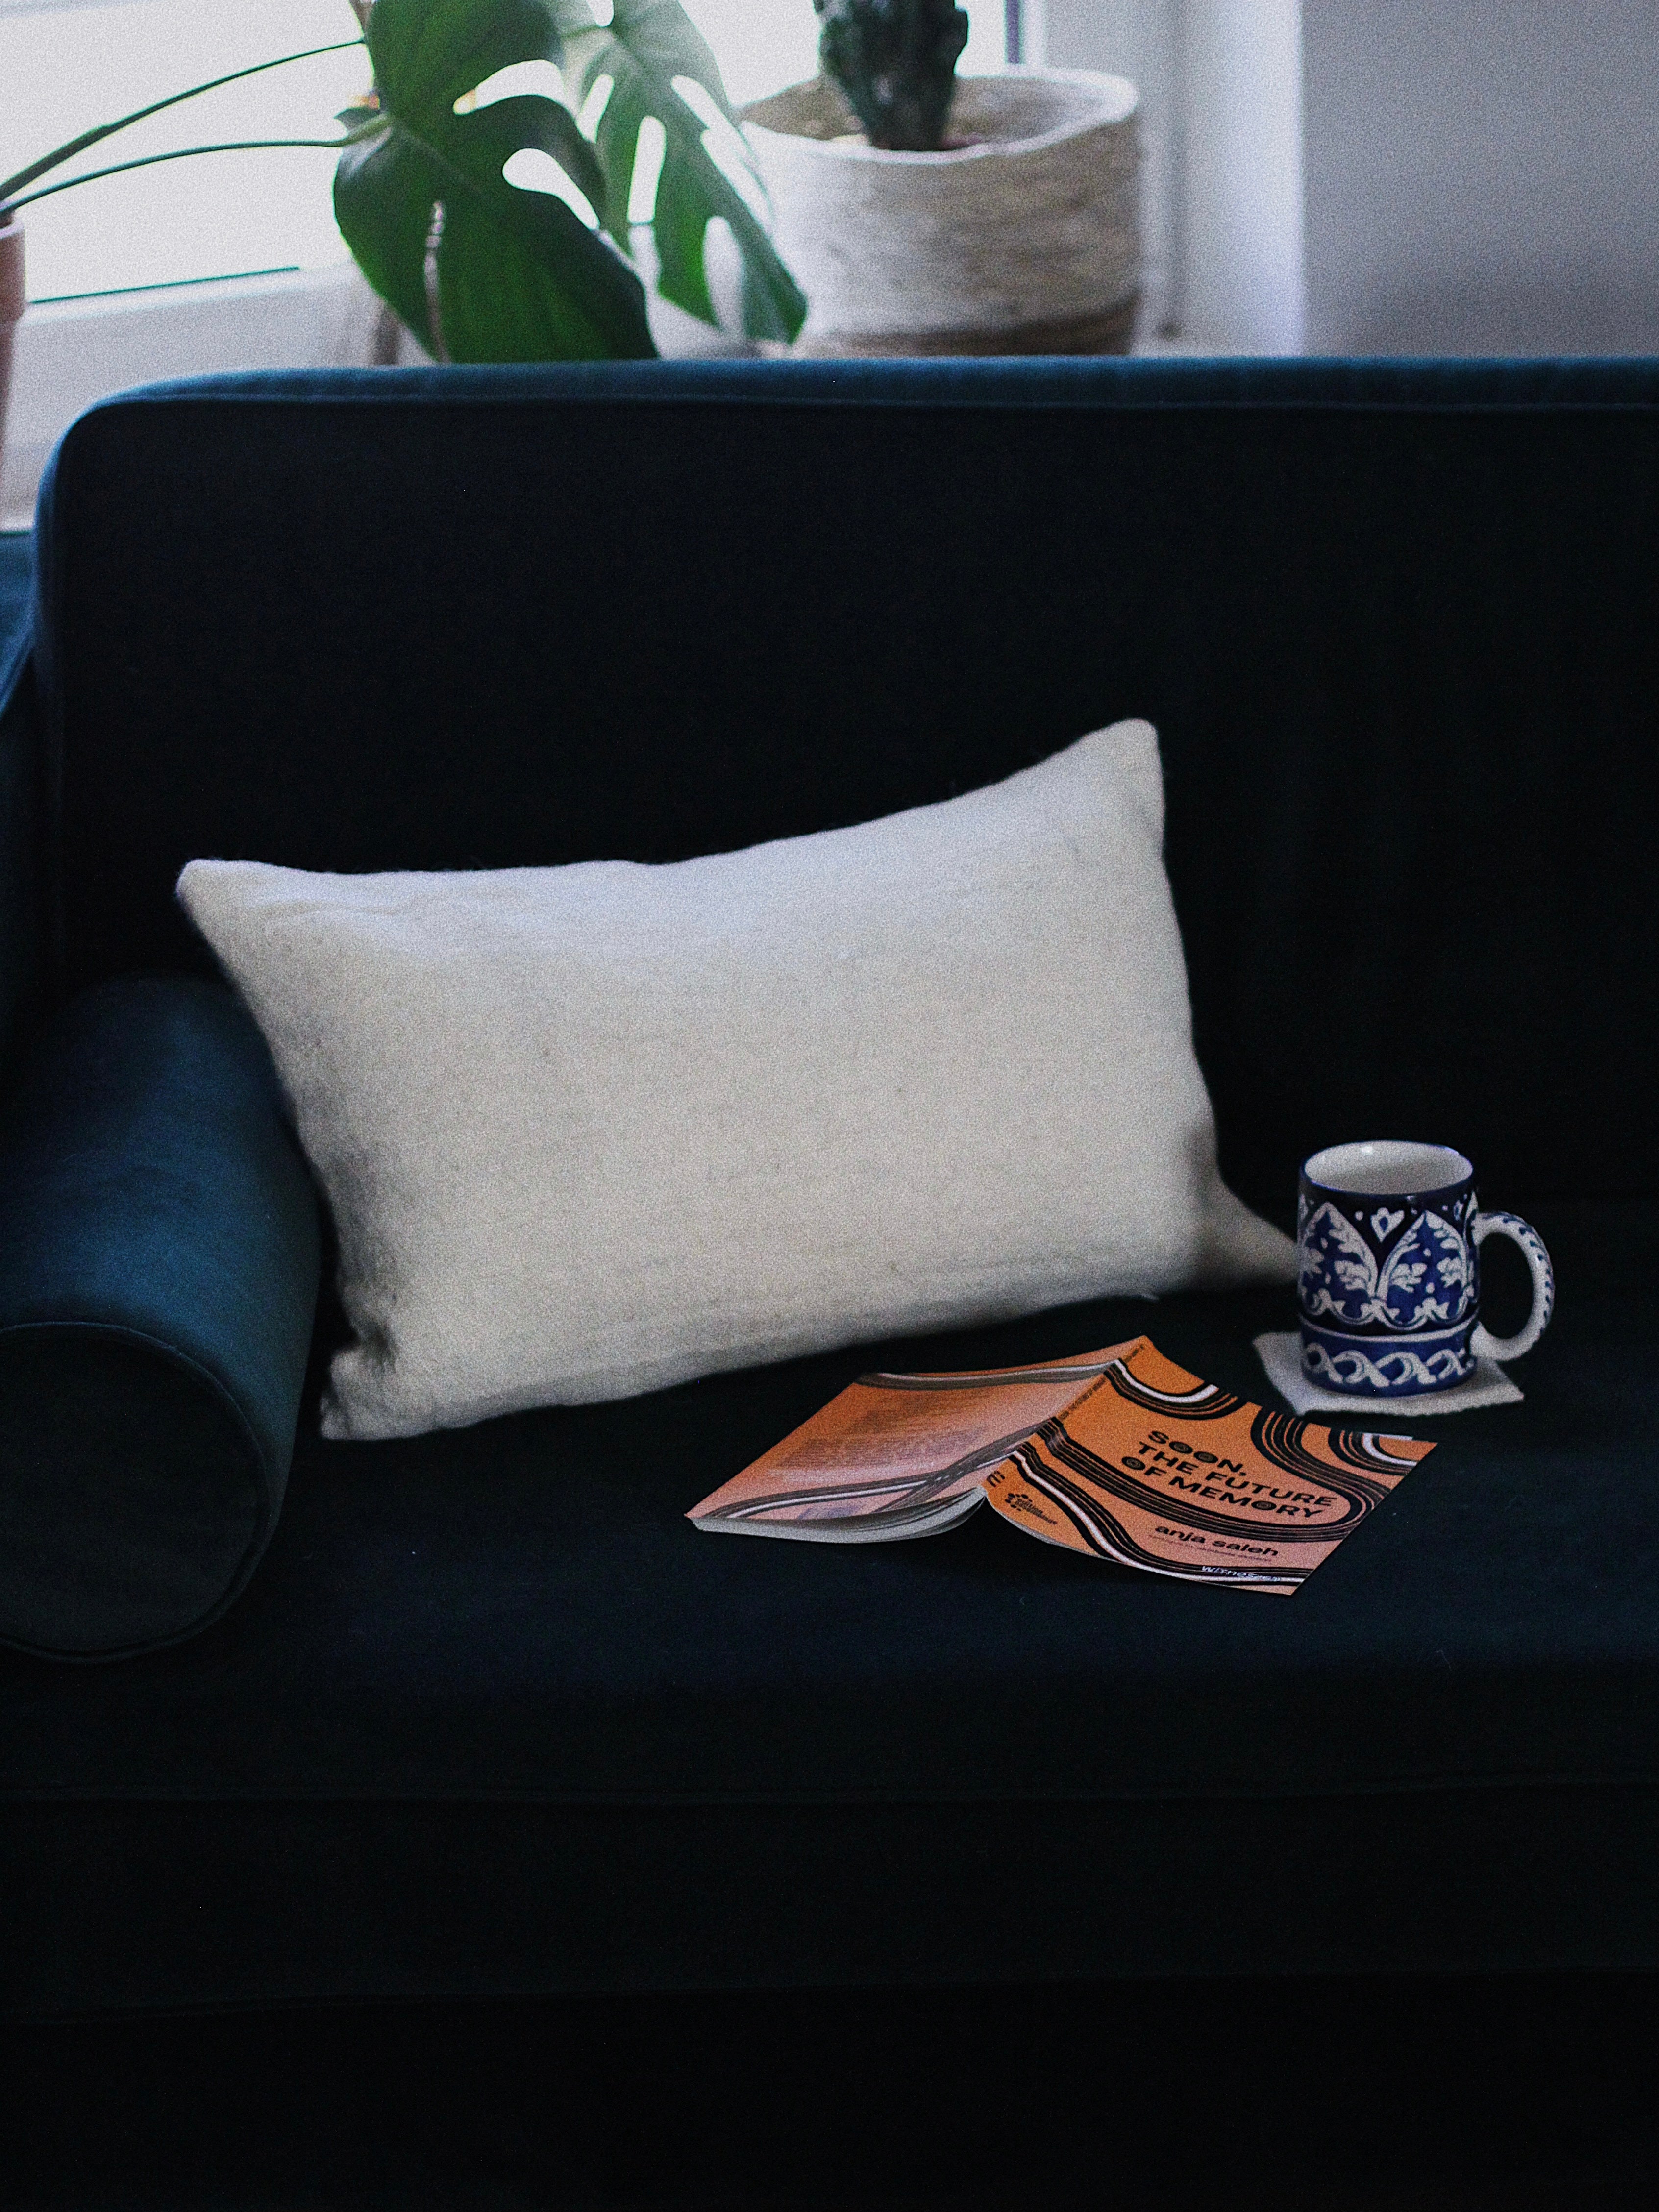 KAITAG Decorative Cushion - Berzeen Crème